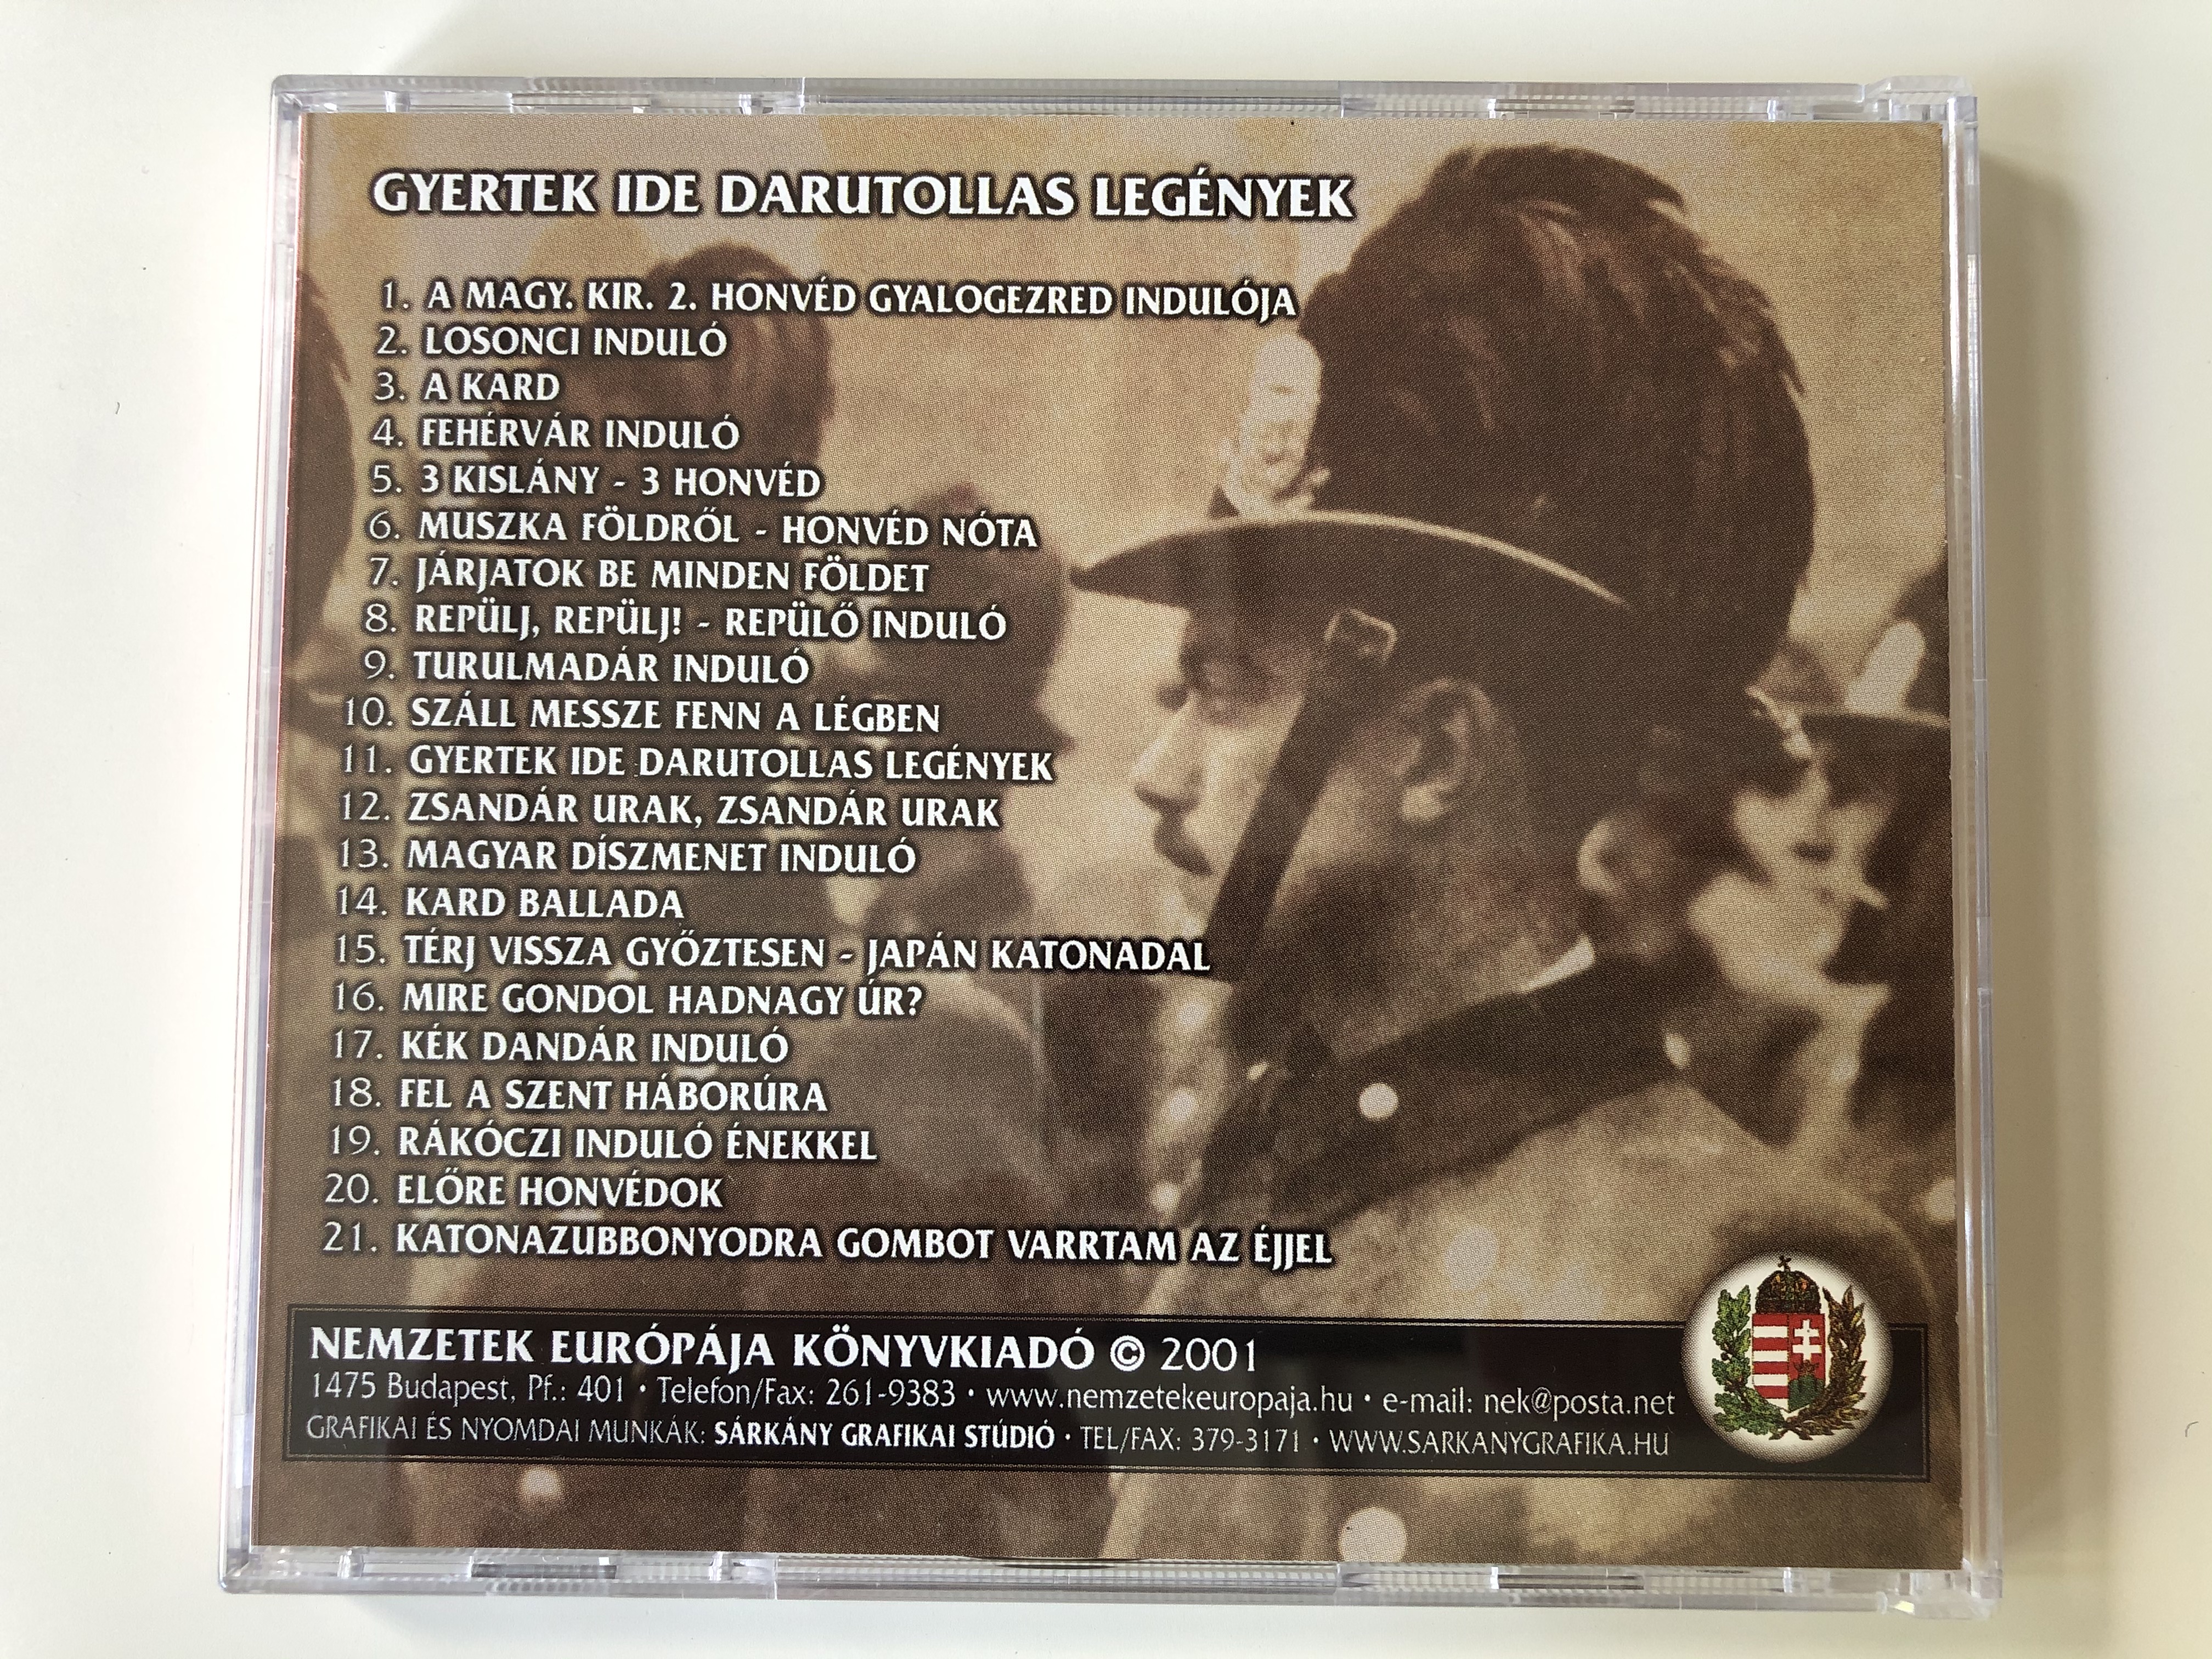 gyertek-ide-darutollas-leg-nyek-1910-1943-nemzetek-eur-p-ja-kiad-audio-cd-2001-necd001-4-.jpg